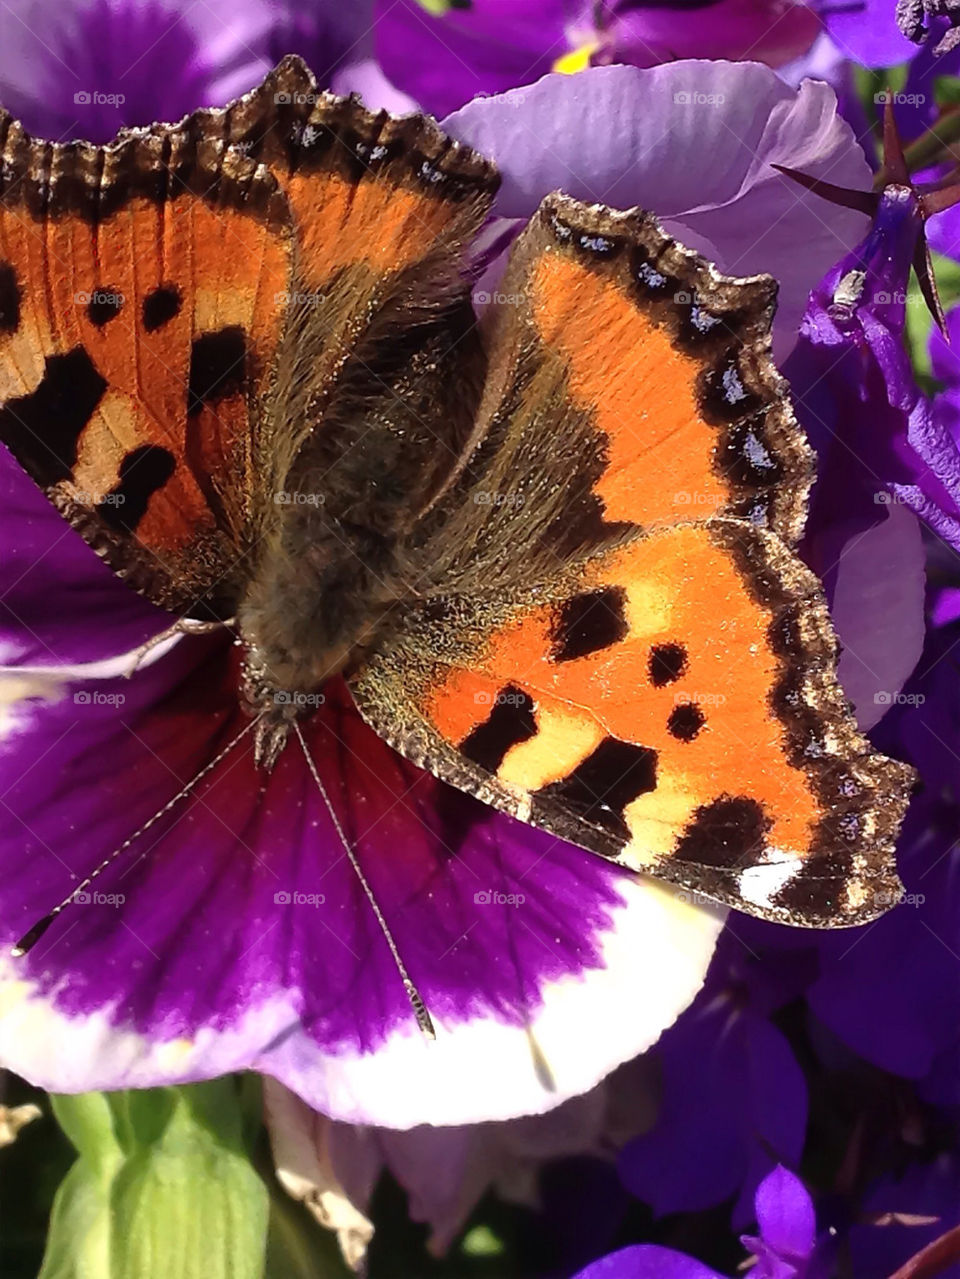 sweden garden butterfly fjäril by elluca